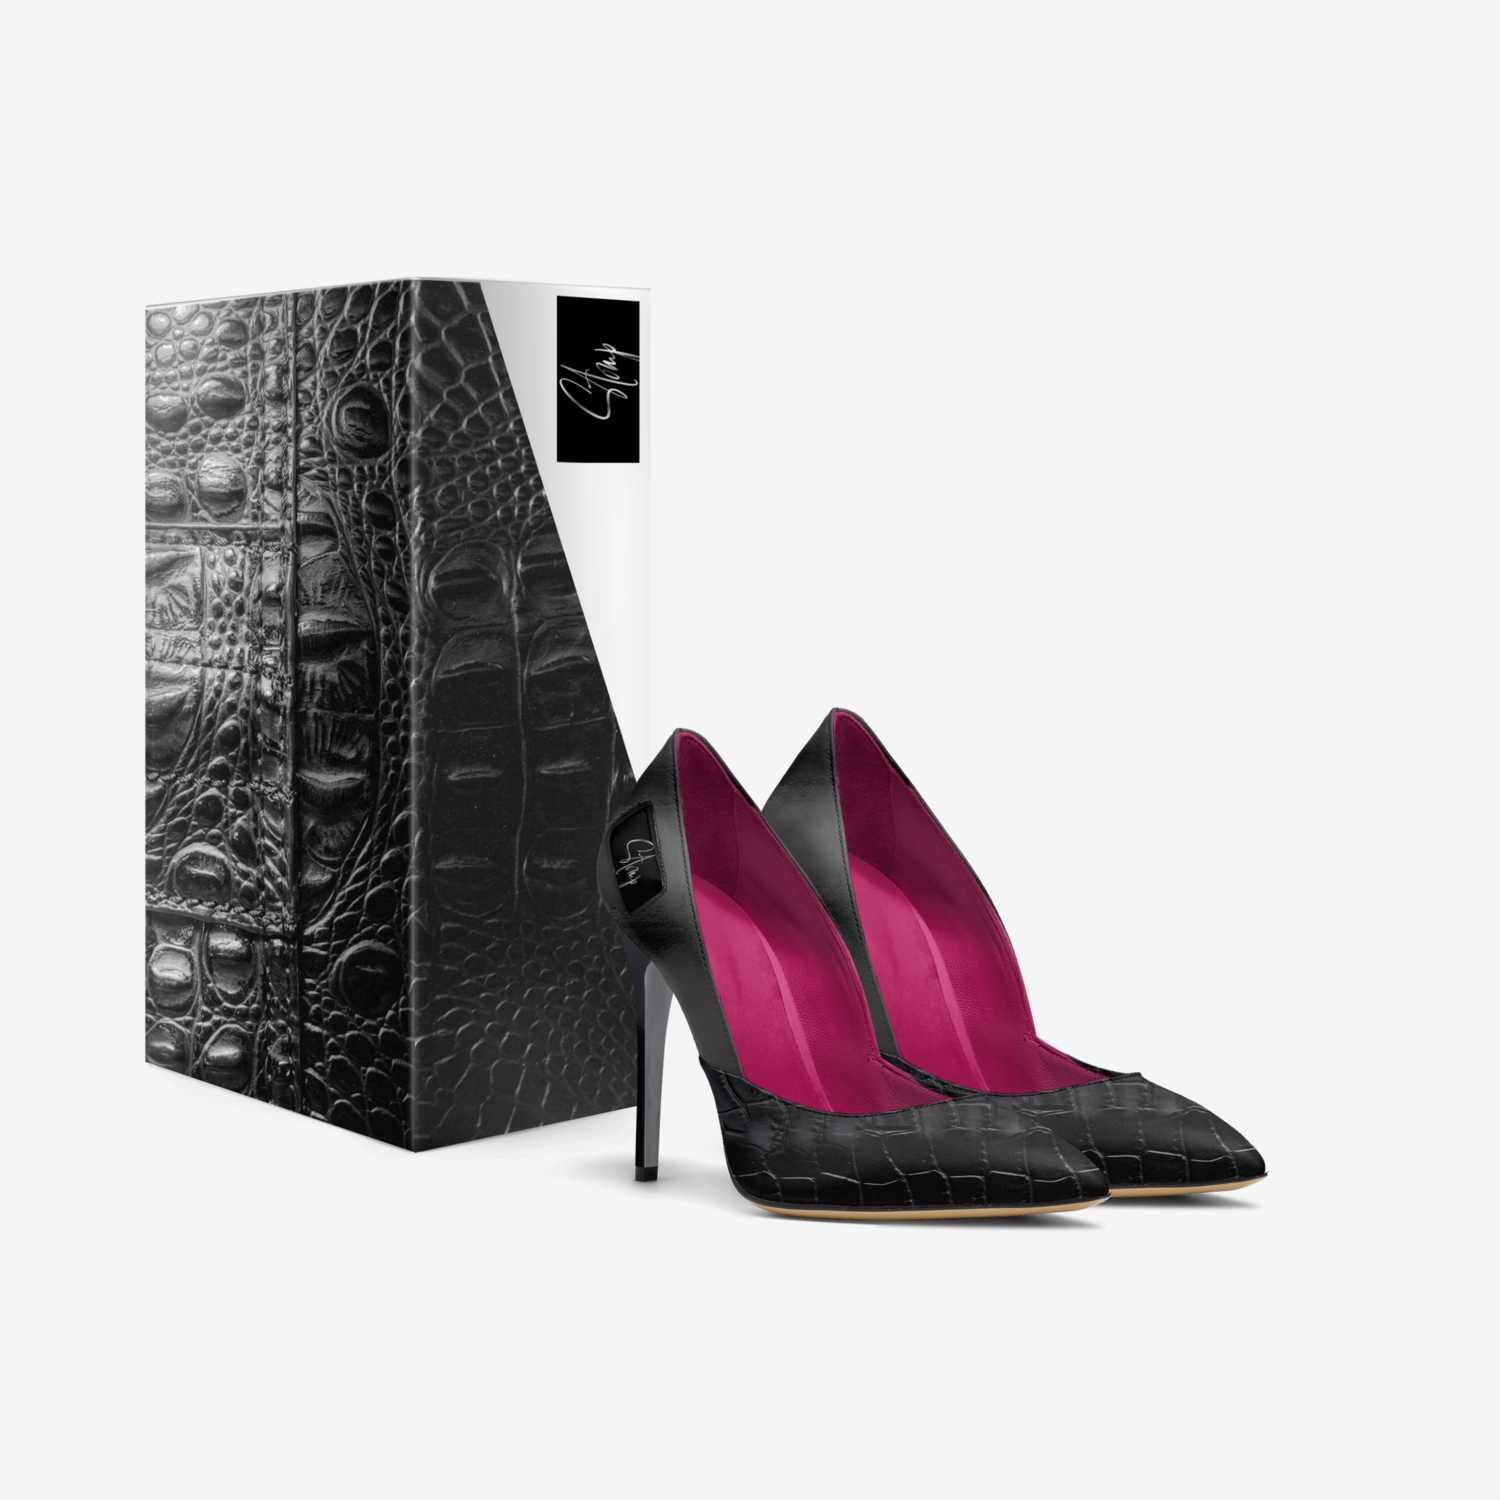 Vertigo custom made in Italy shoes by Krystal R. Mcgee | Box view